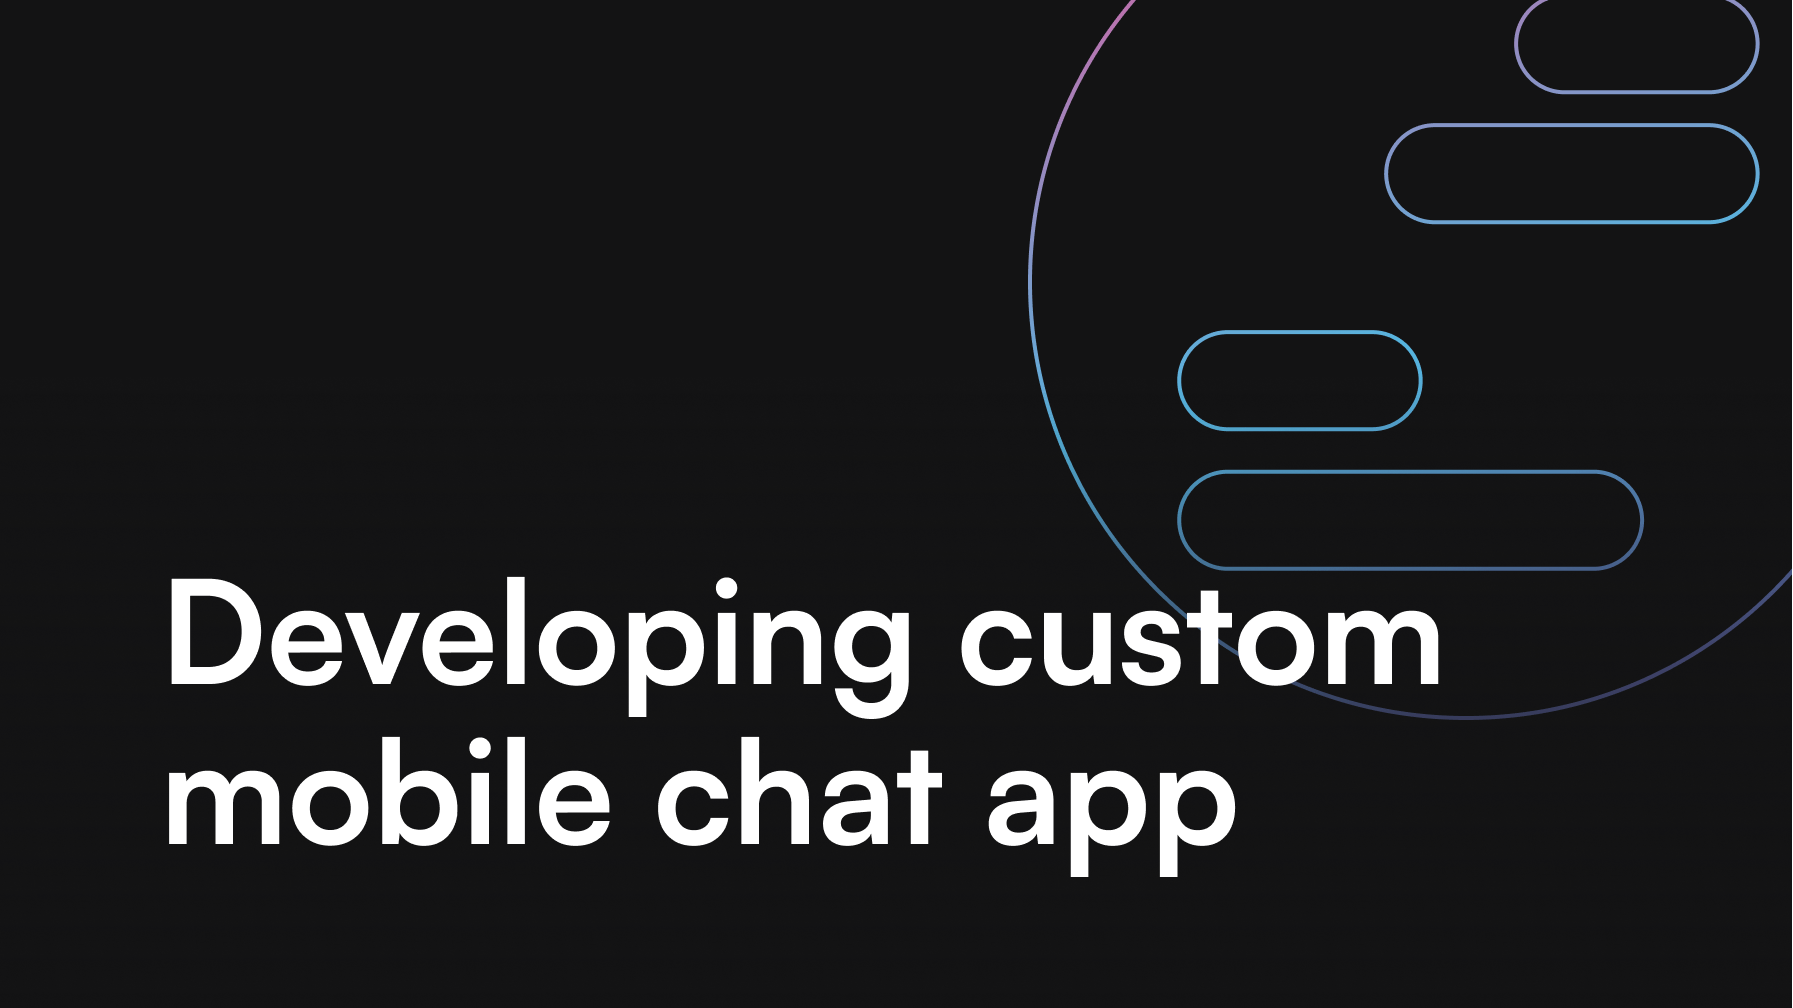 chat app development process